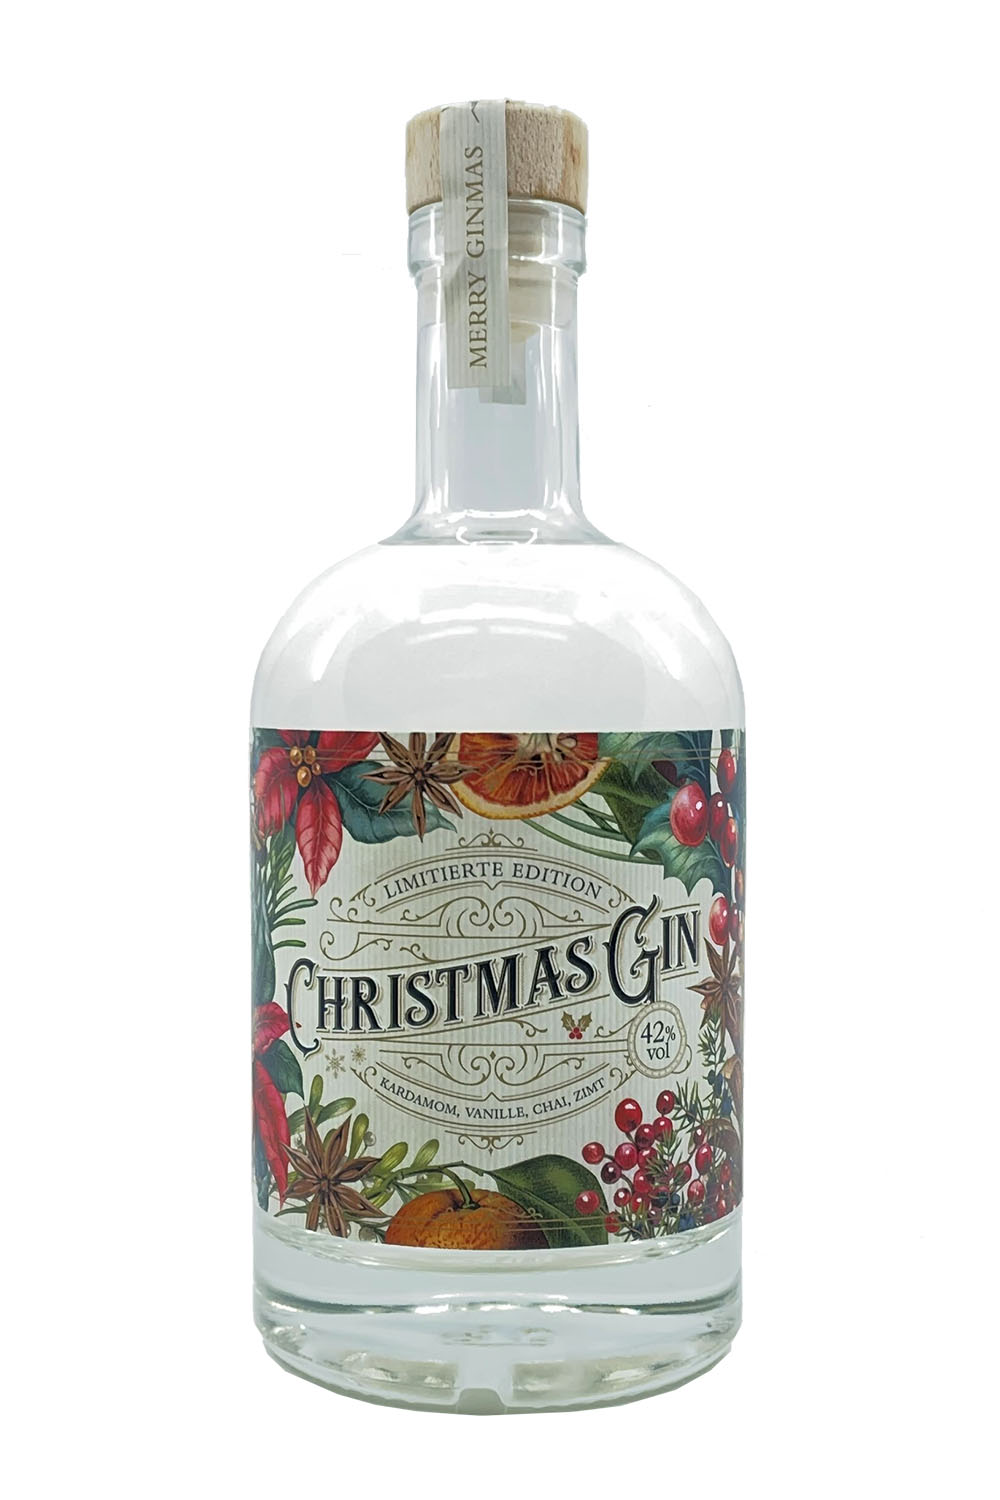 Wajos Christmas Gin 0,5l 42%vol.